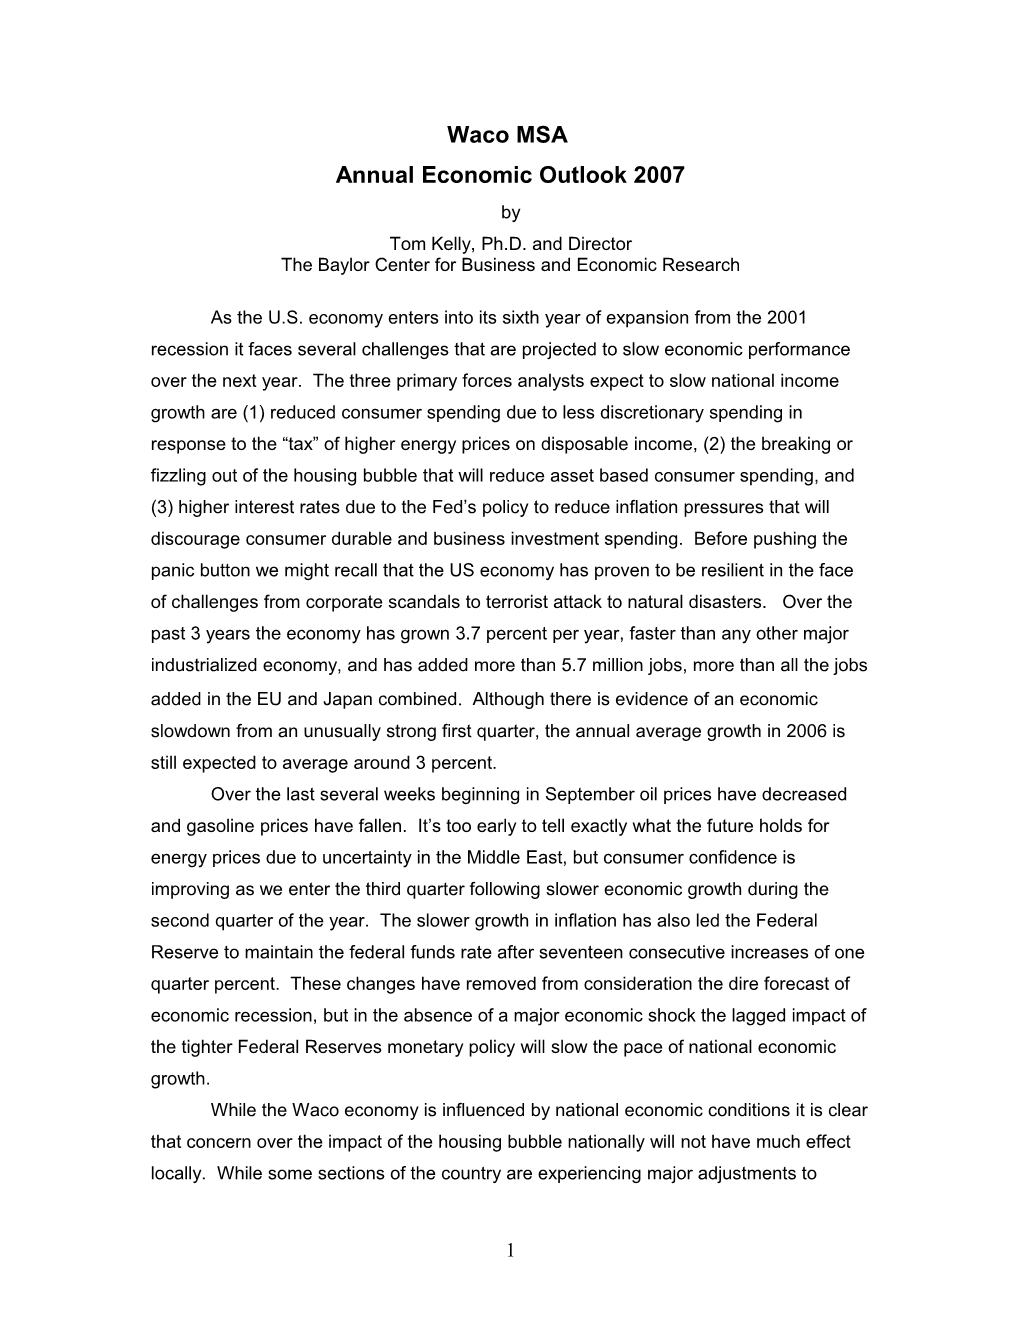 Waco MSA Economic Forecast for 2007